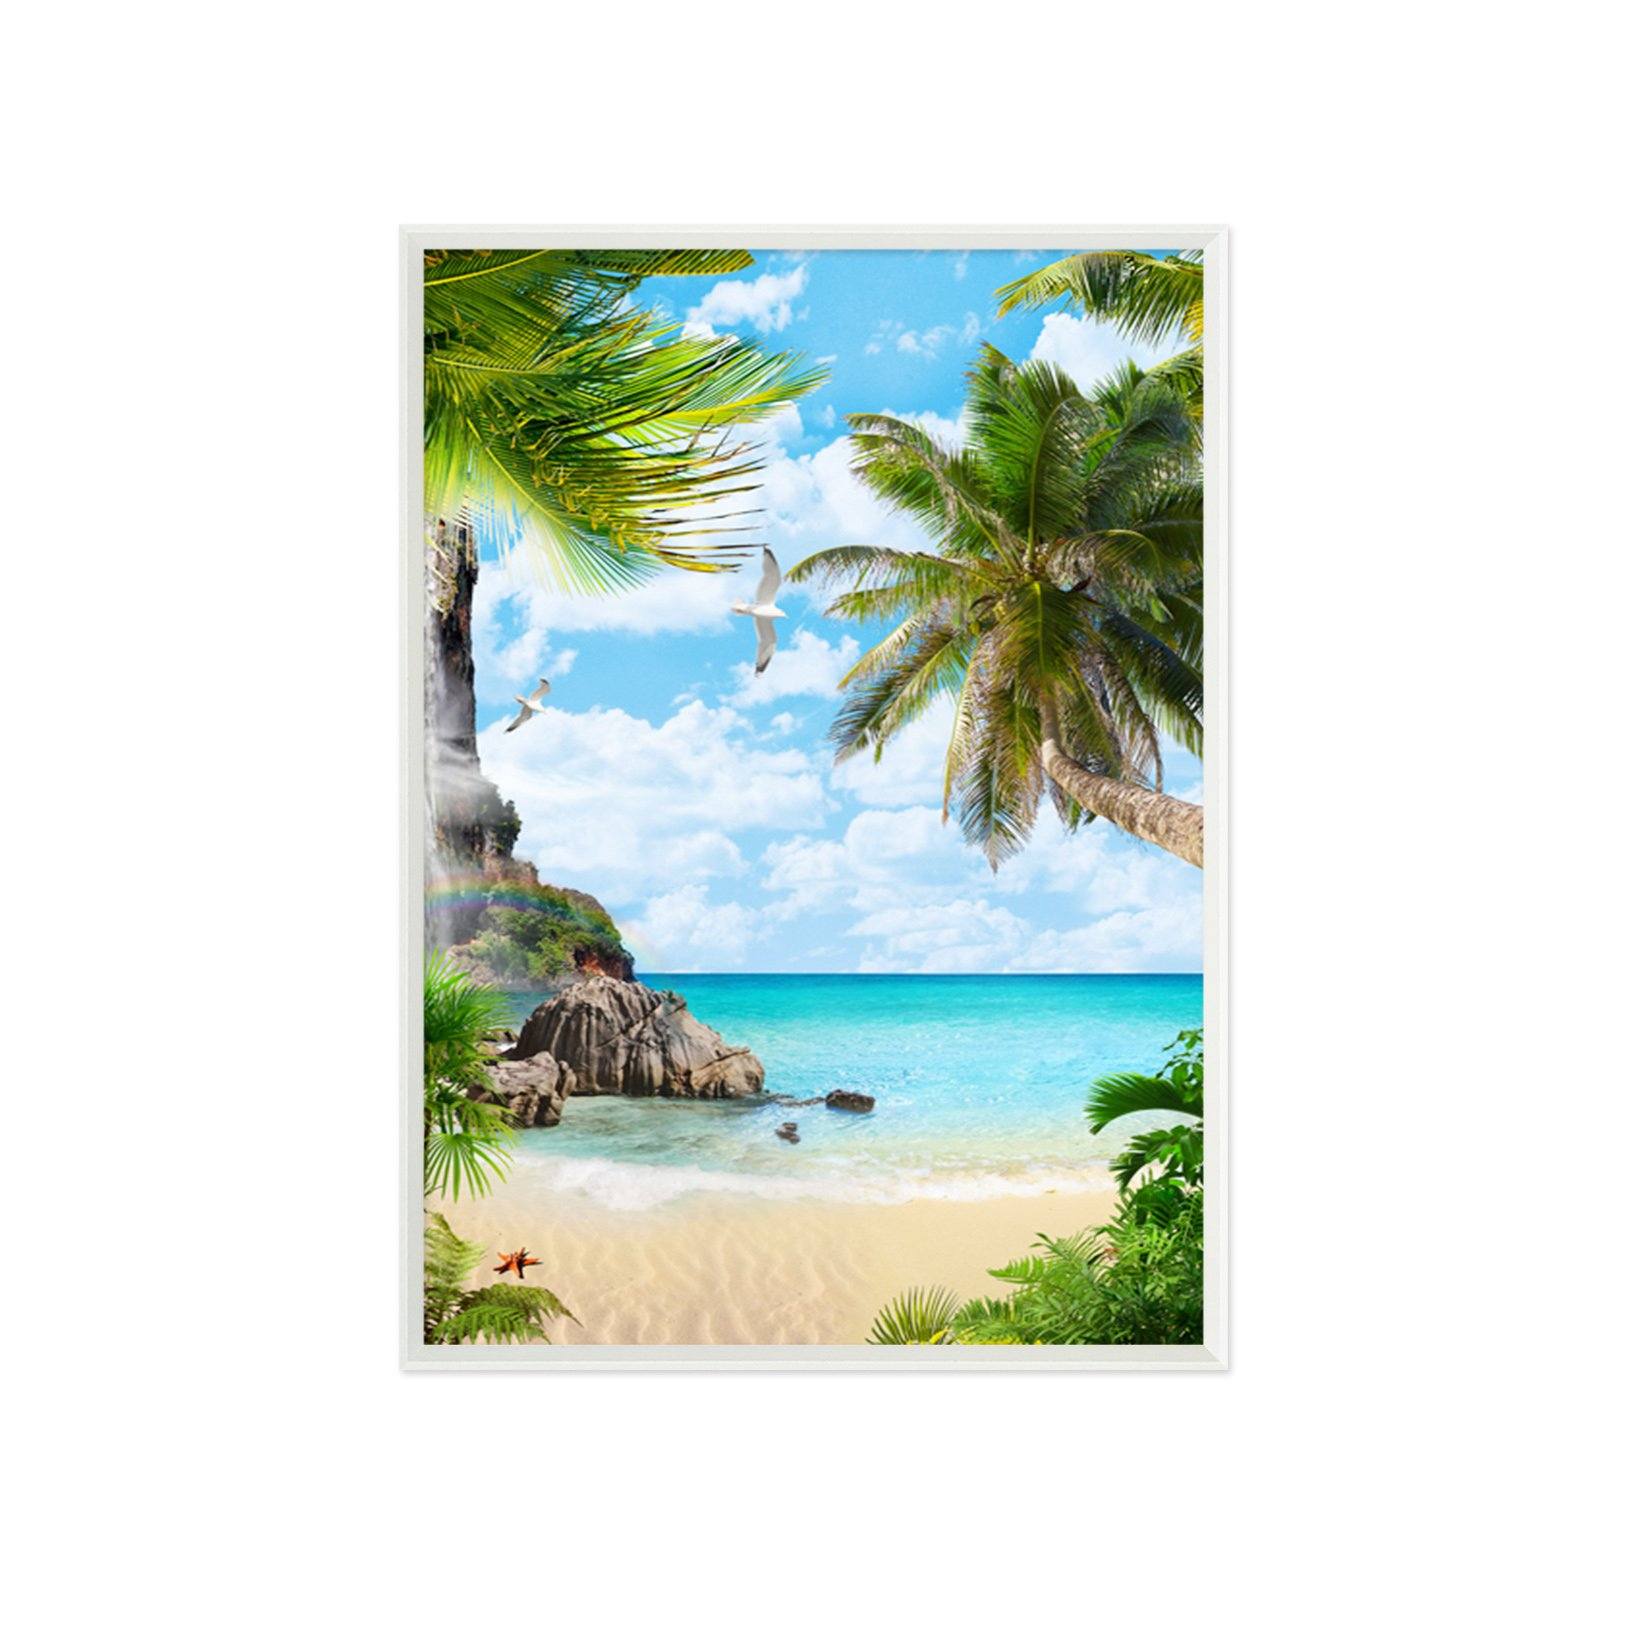 3D Coconut Beach 043 Fake Framed Print Painting Wallpaper AJ Creativity Home 